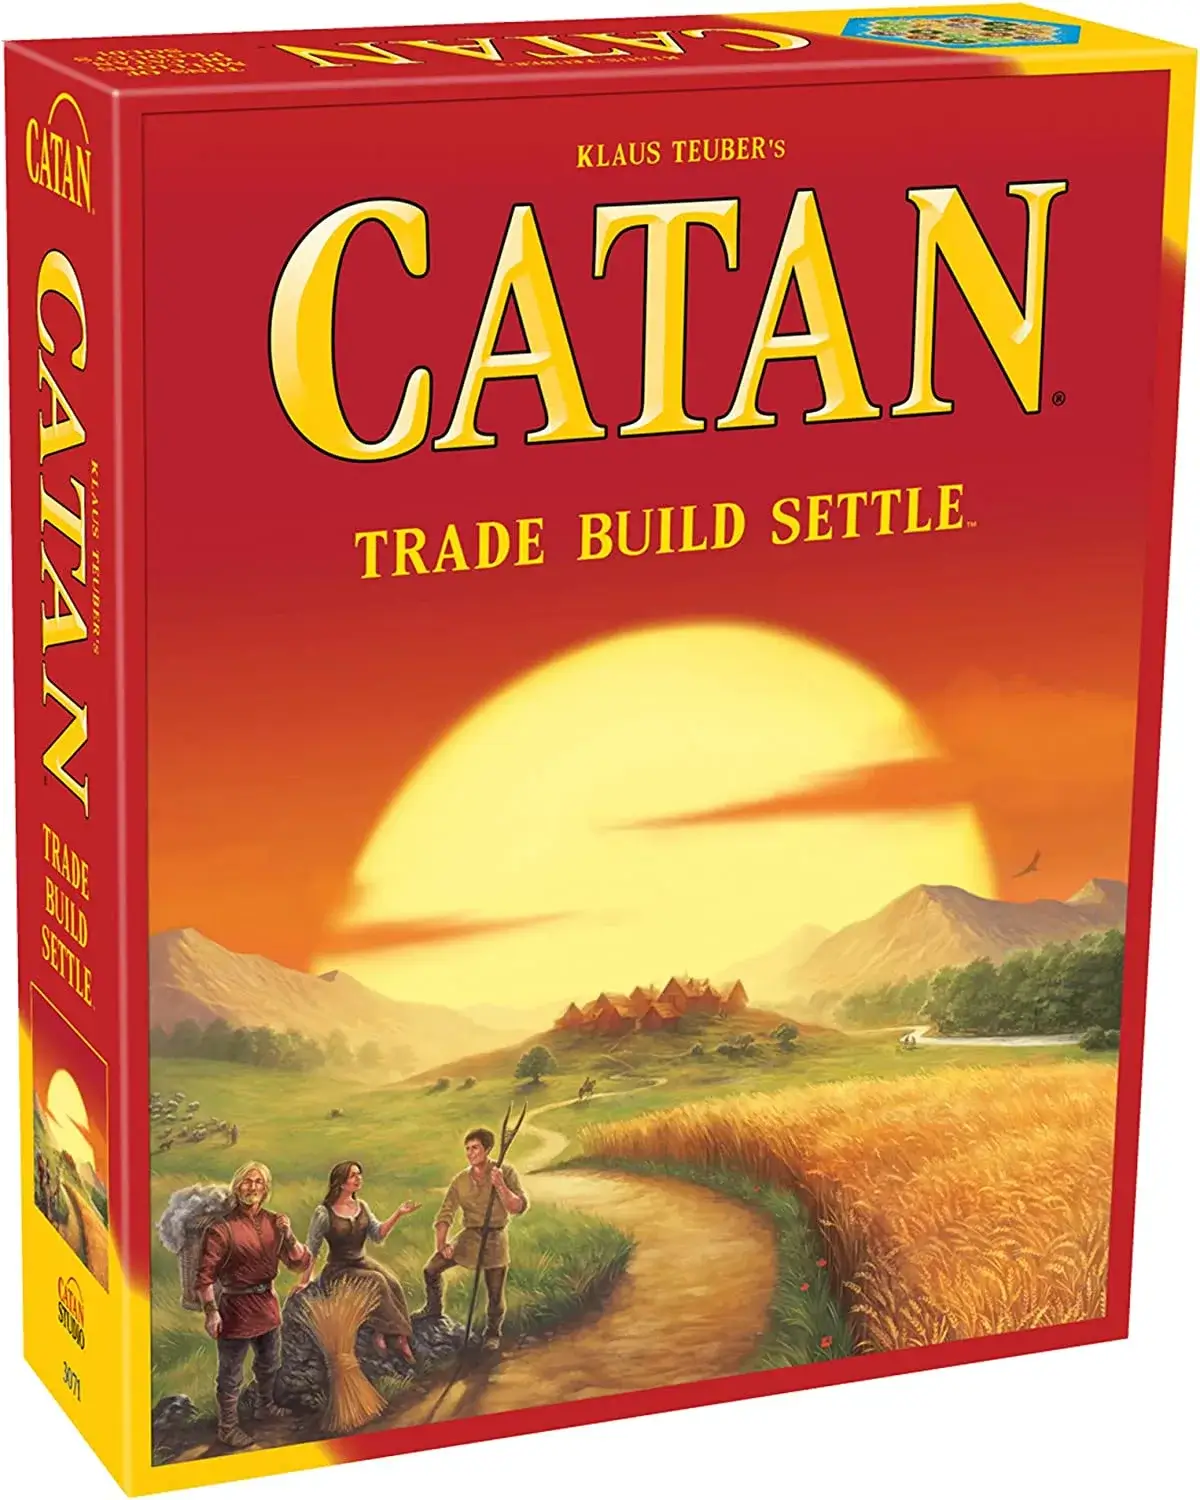 CATAN board game box